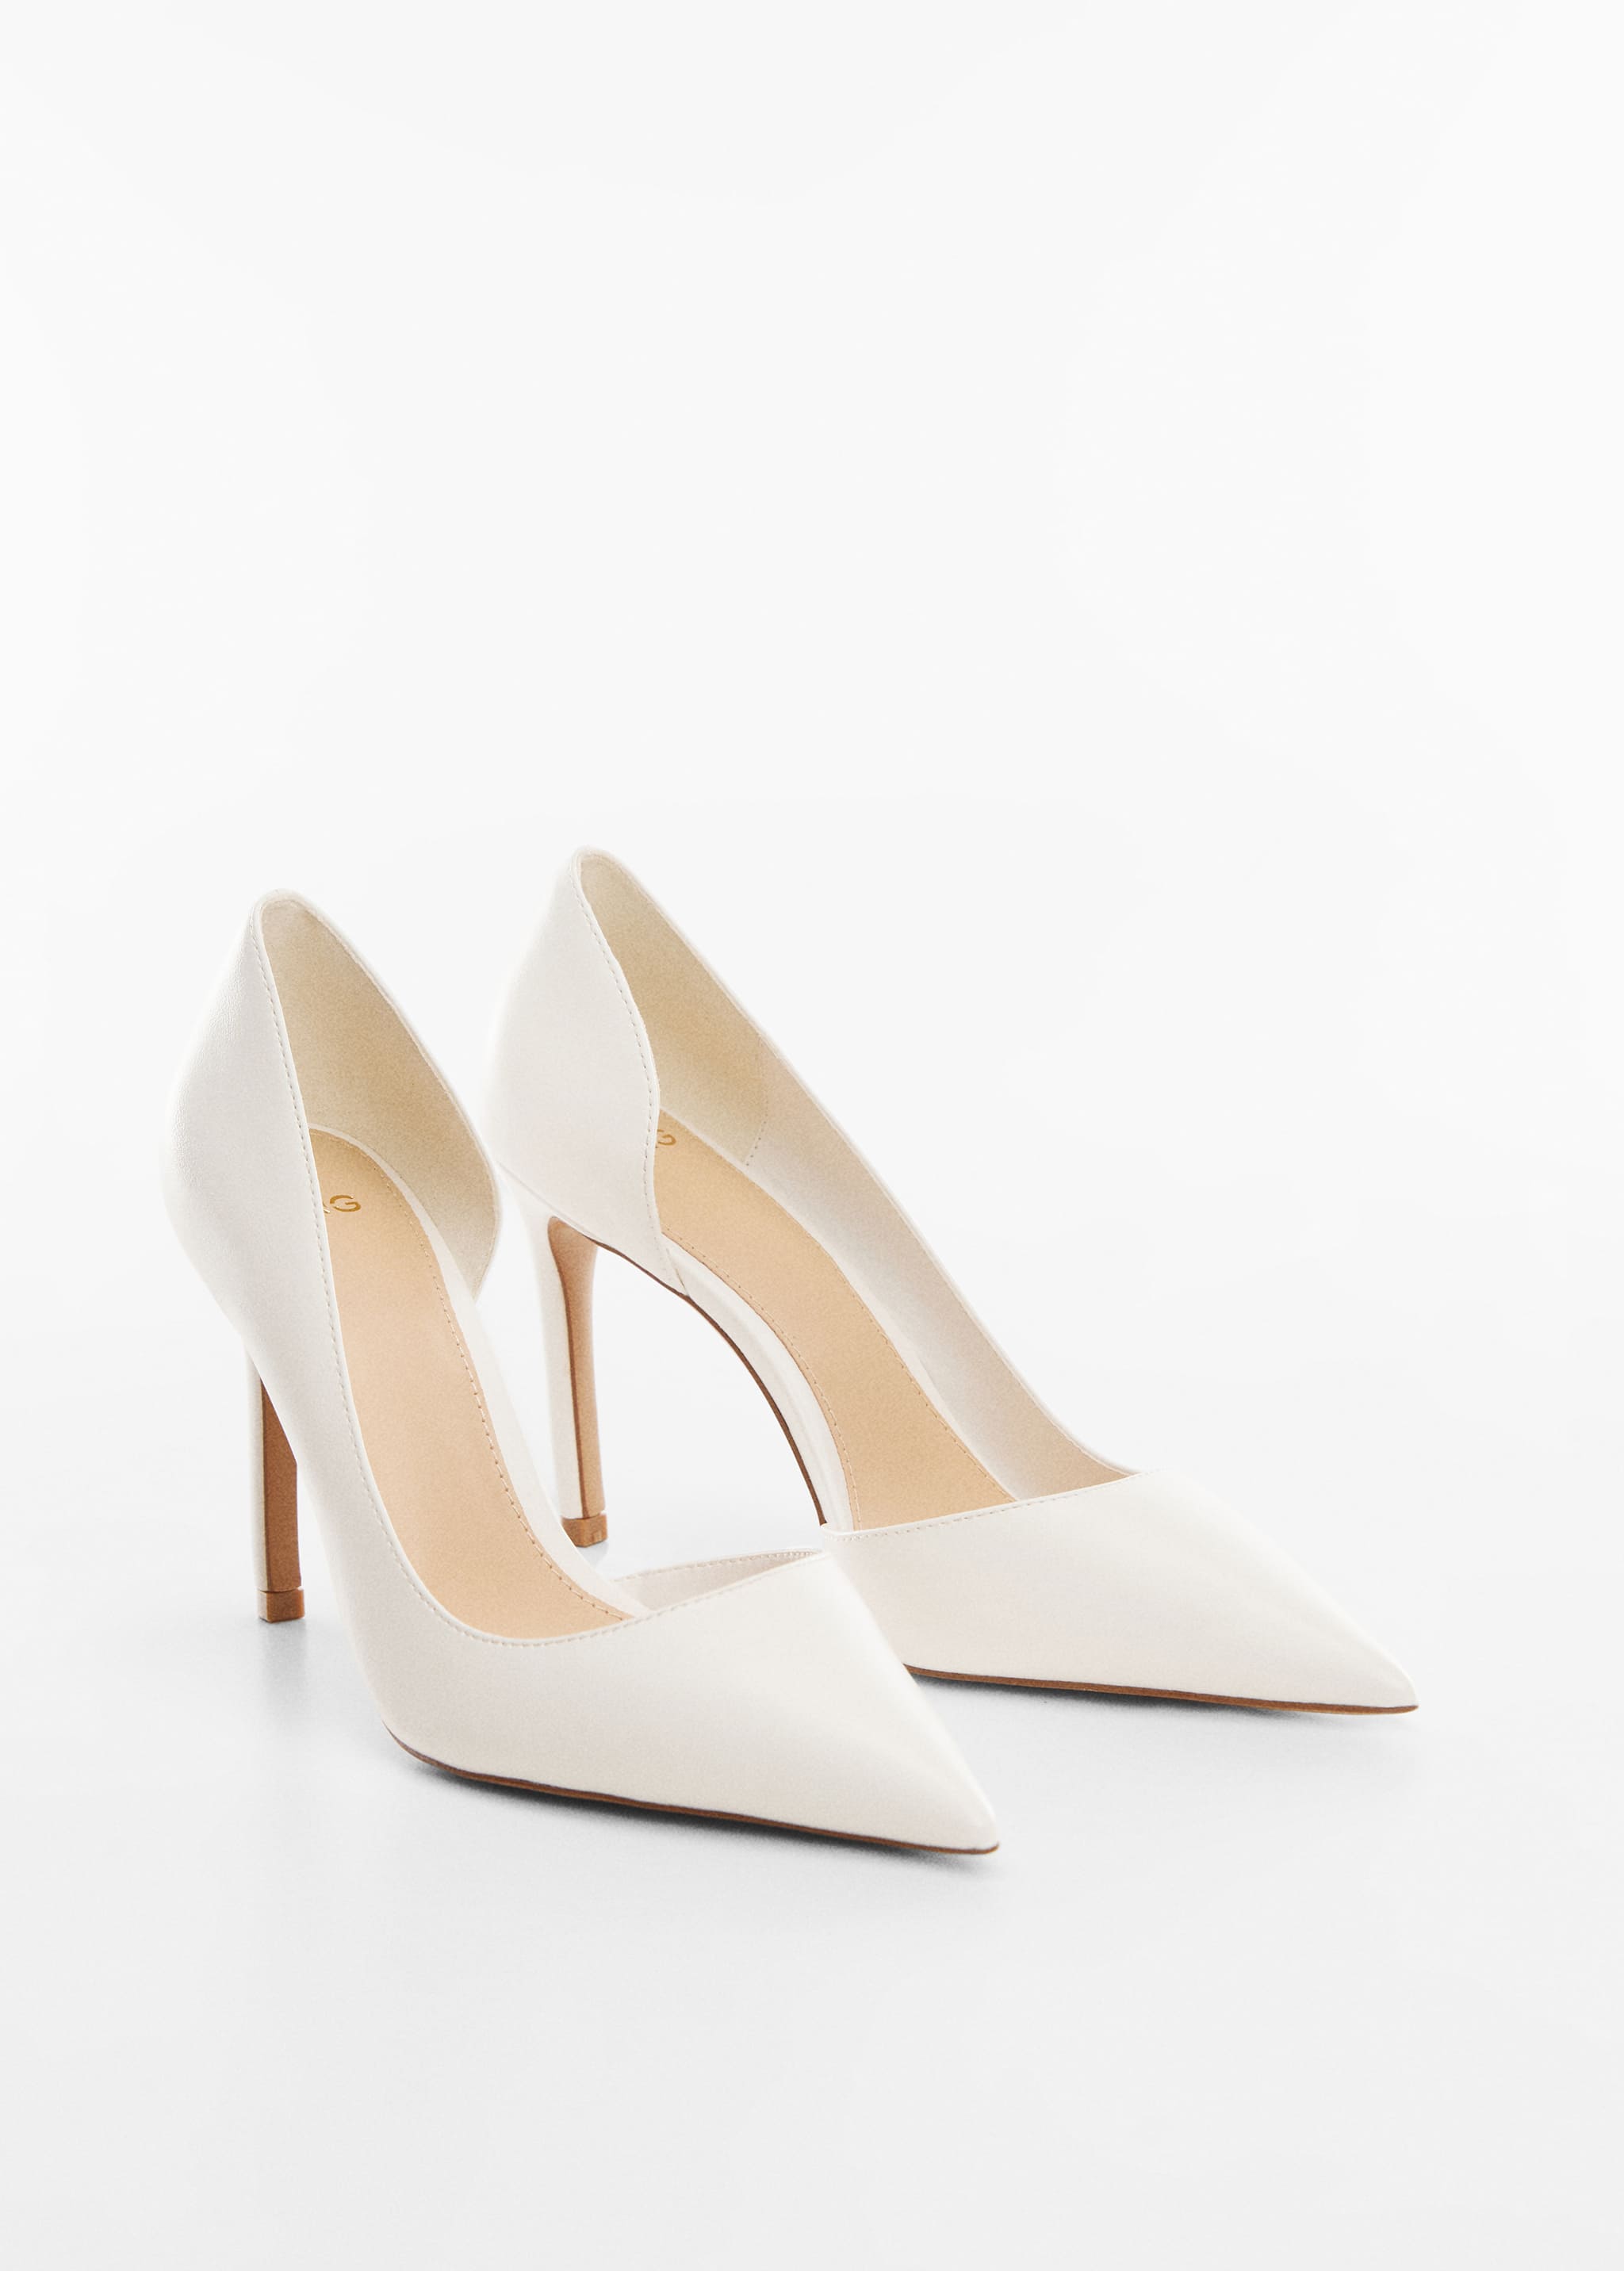 Asymmetrical heeled shoes - Medium plane